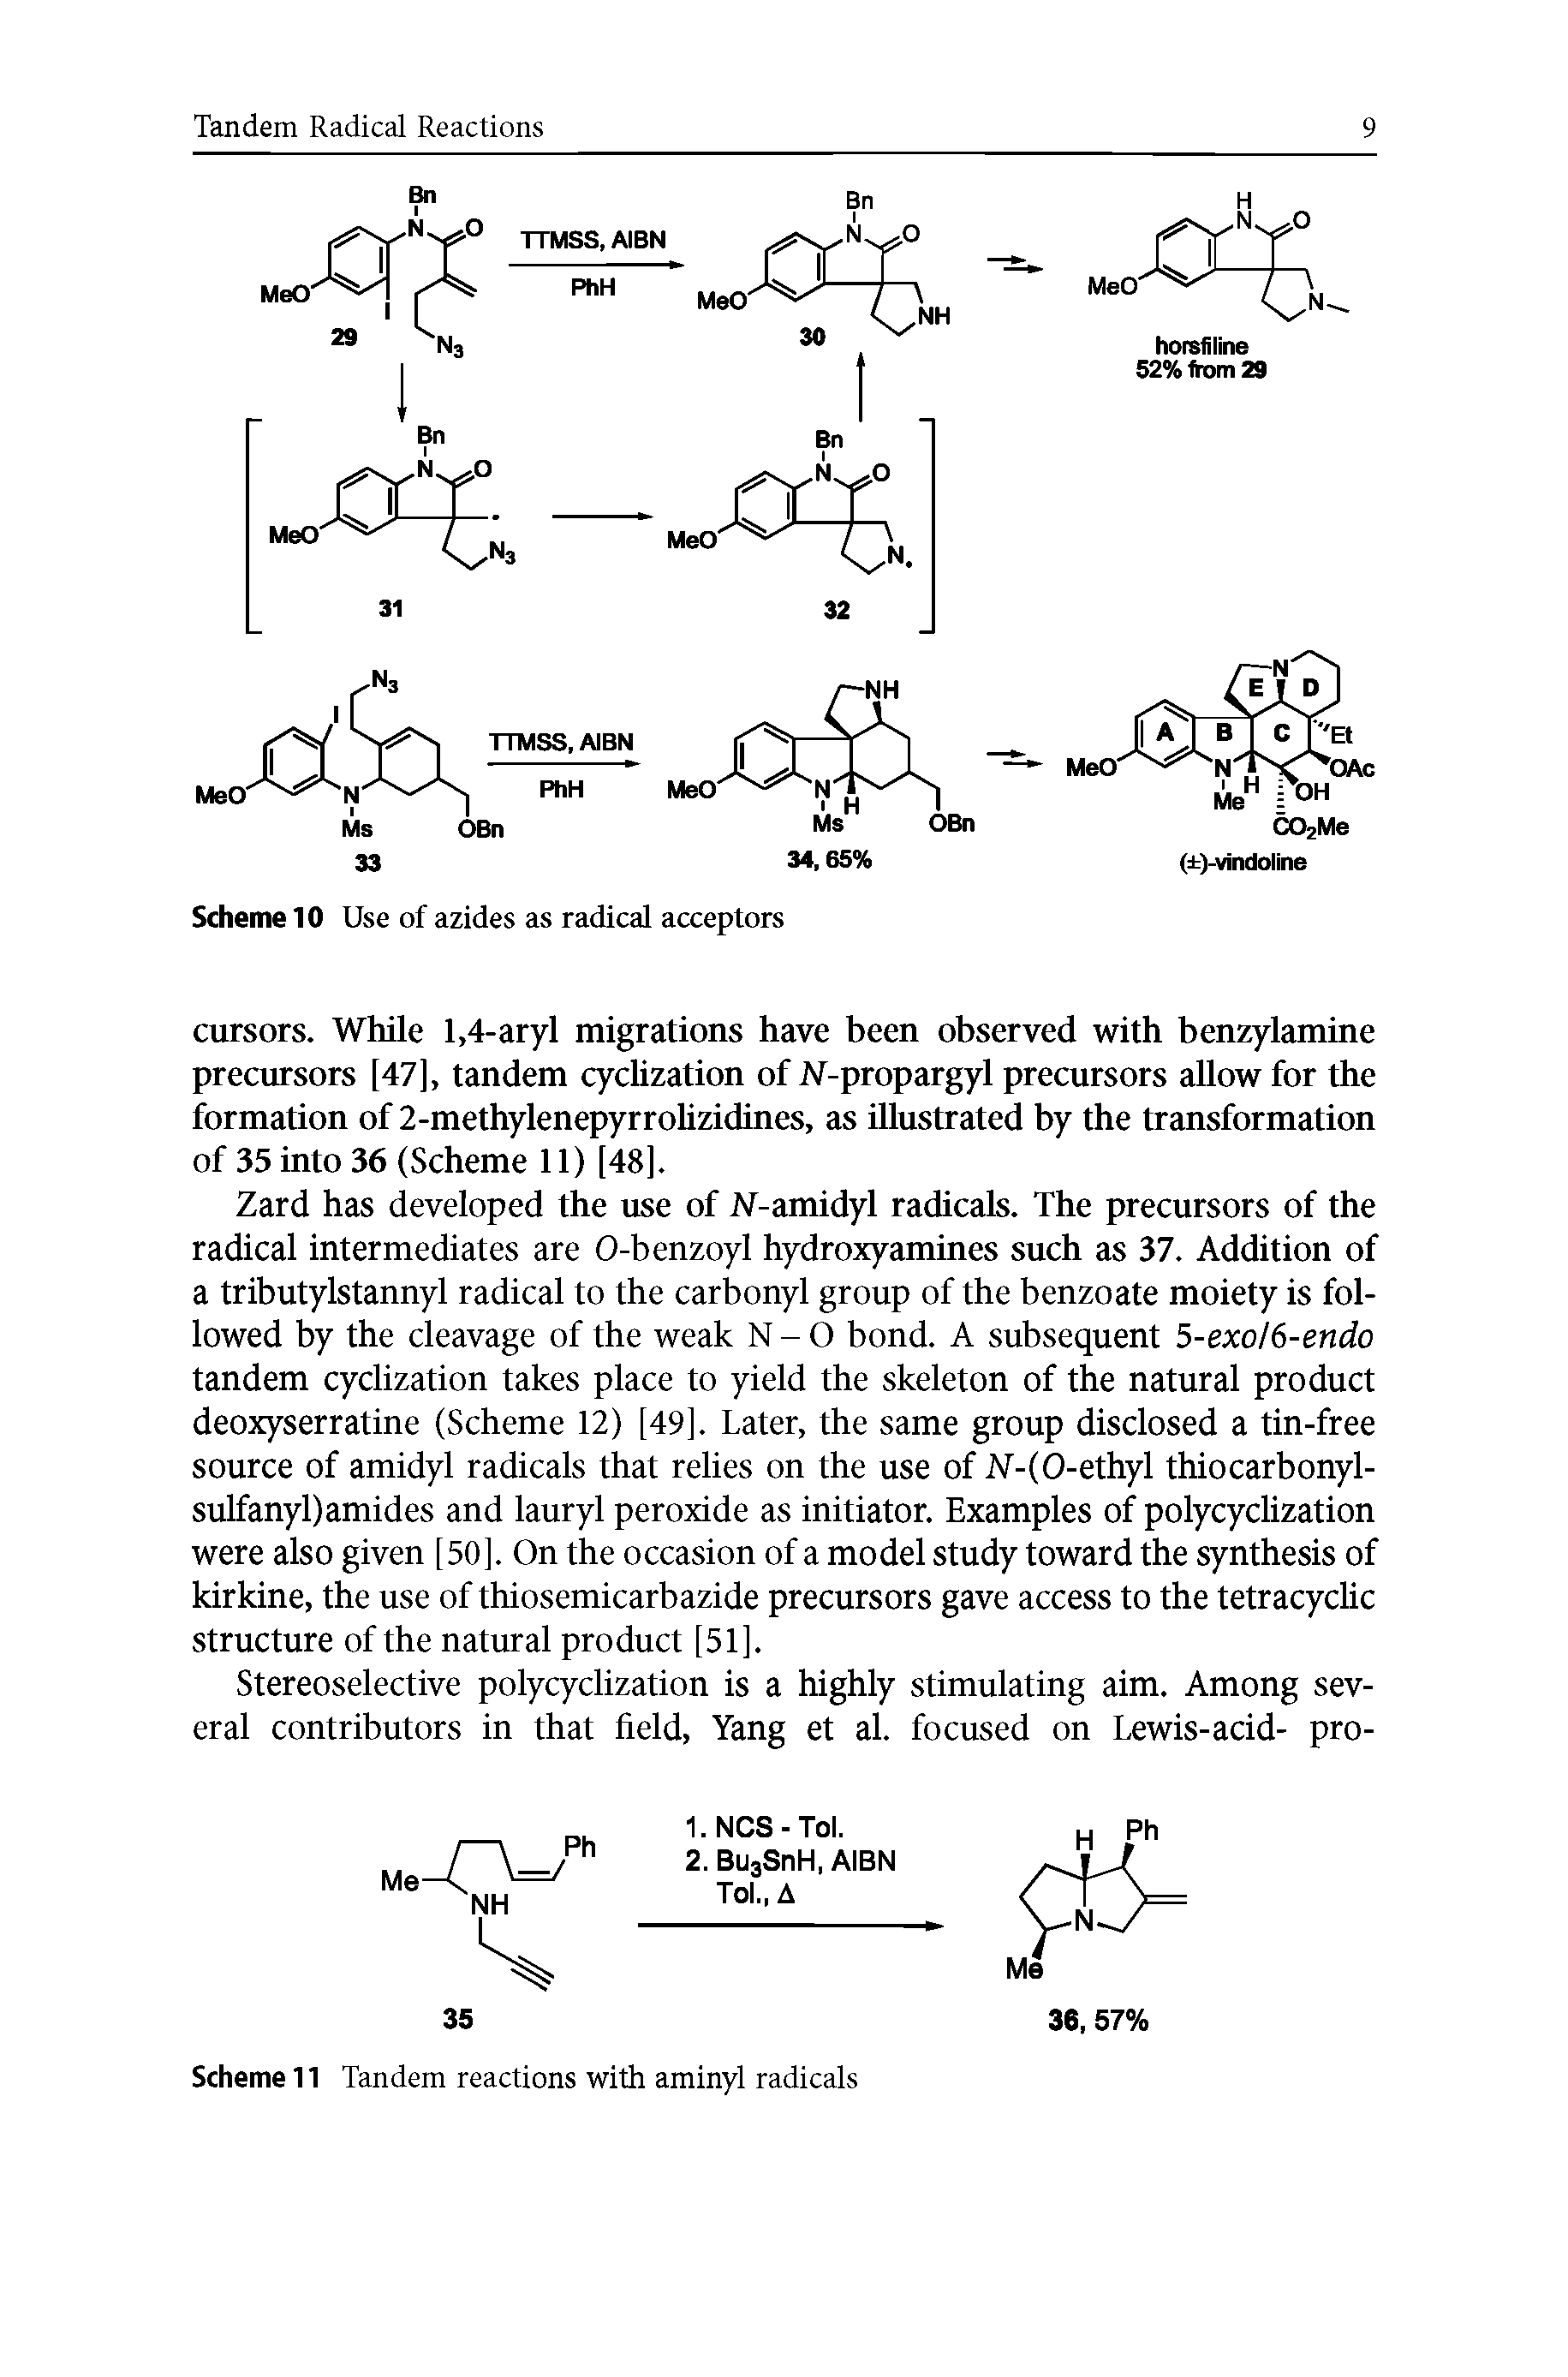 Scheme 11 Tandem reactions with aminyl radicals...